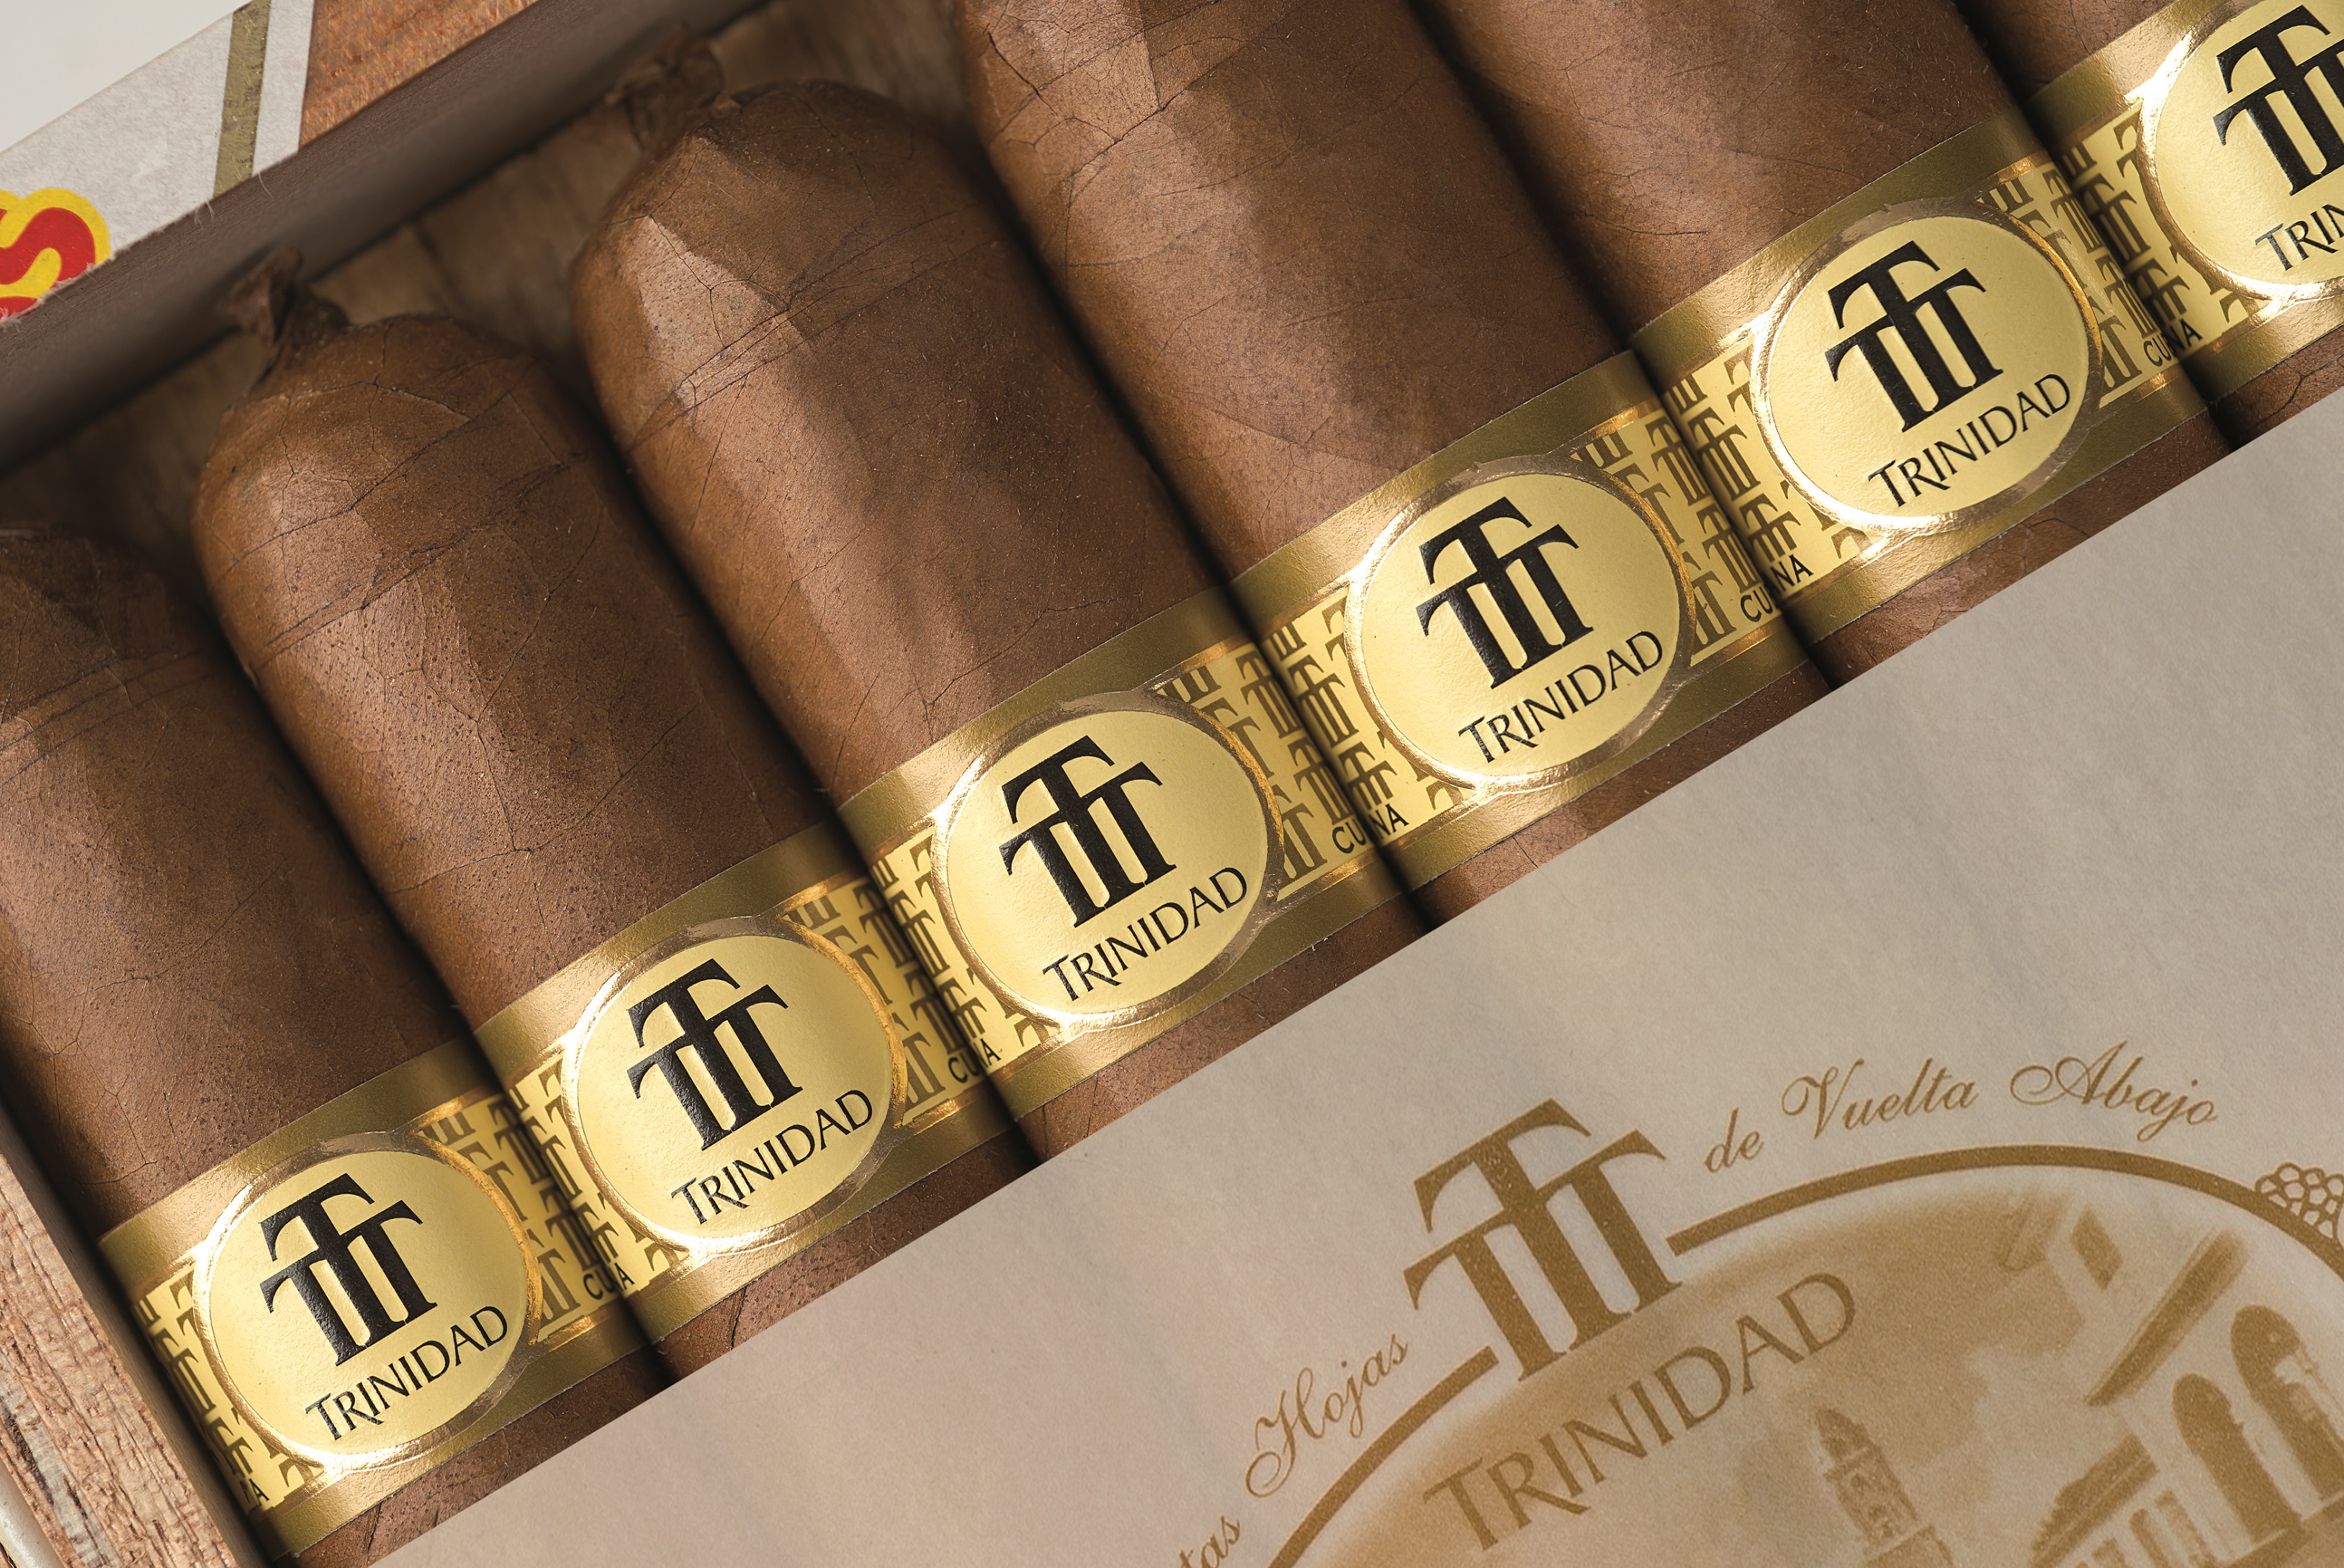 Trinidad cigars